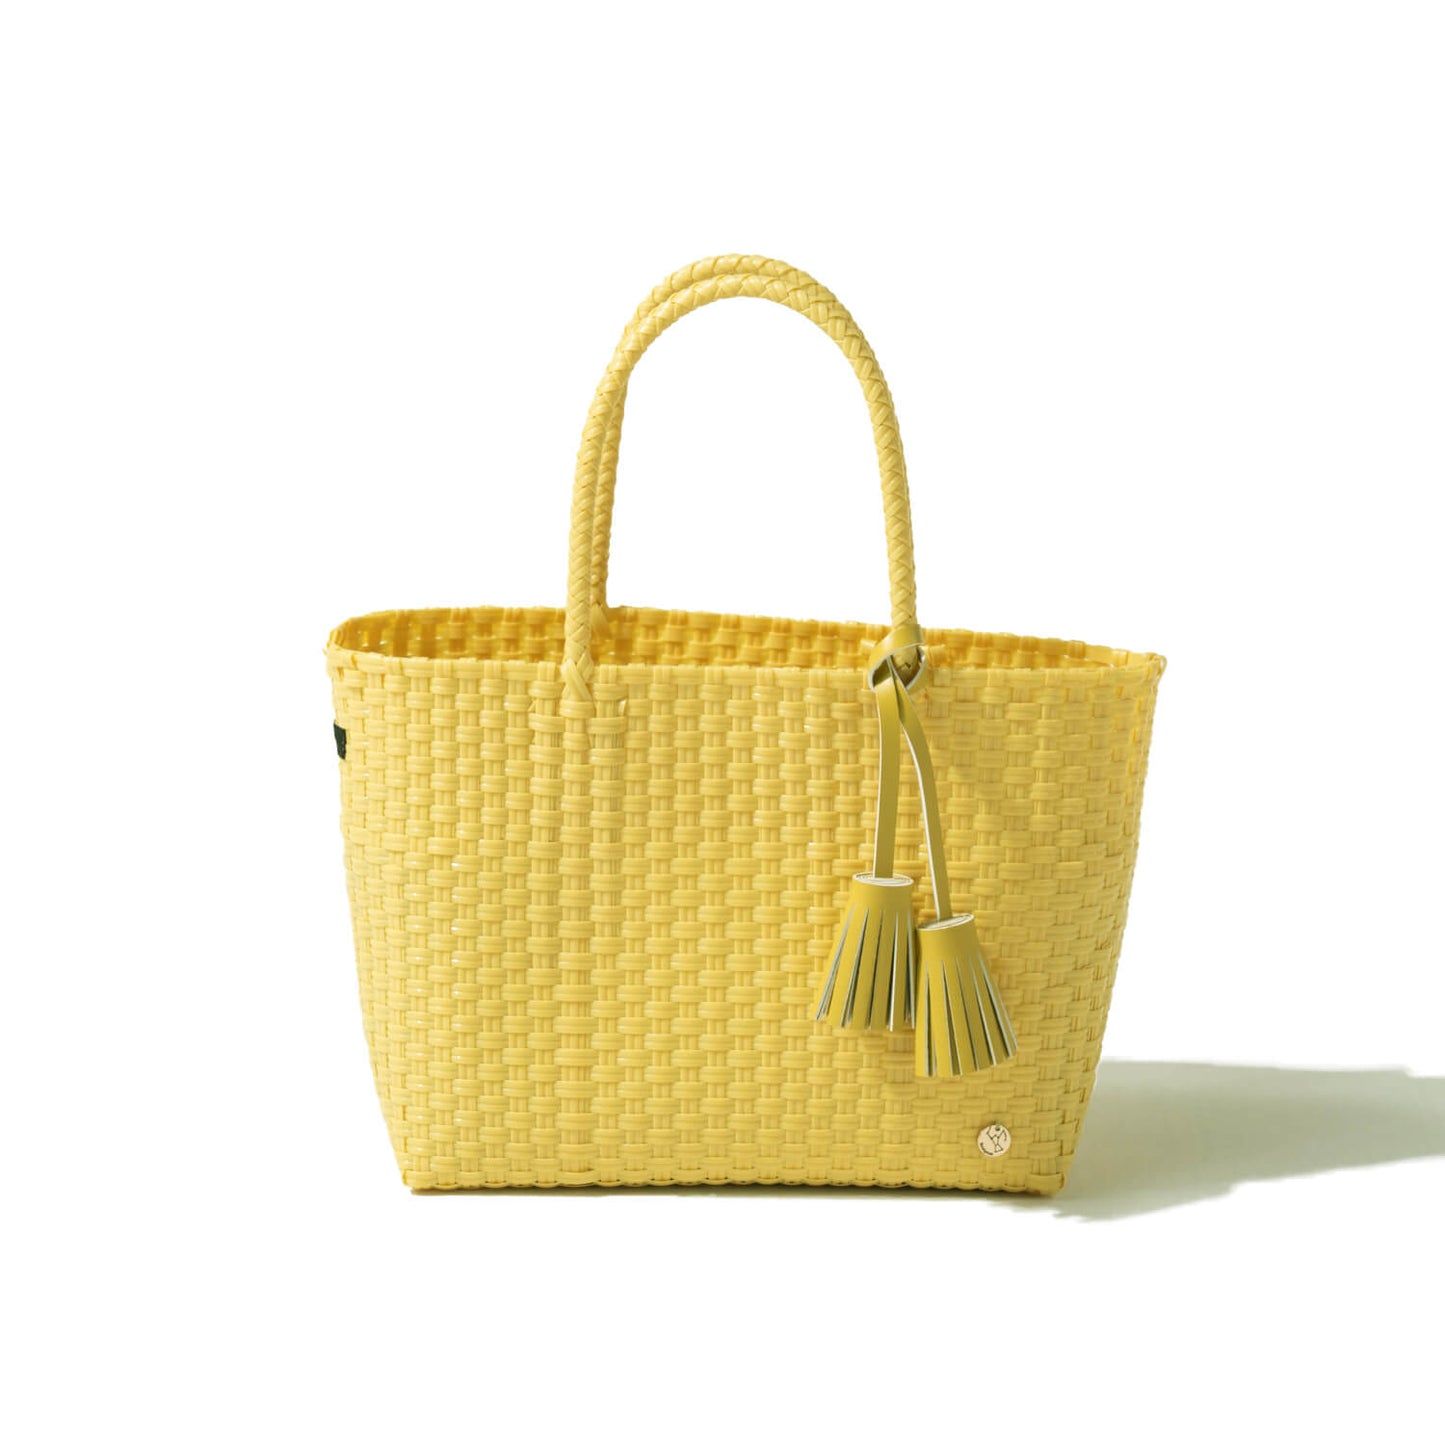 Mercado bag 「Bacerra S size」 Color: Lemon yellow